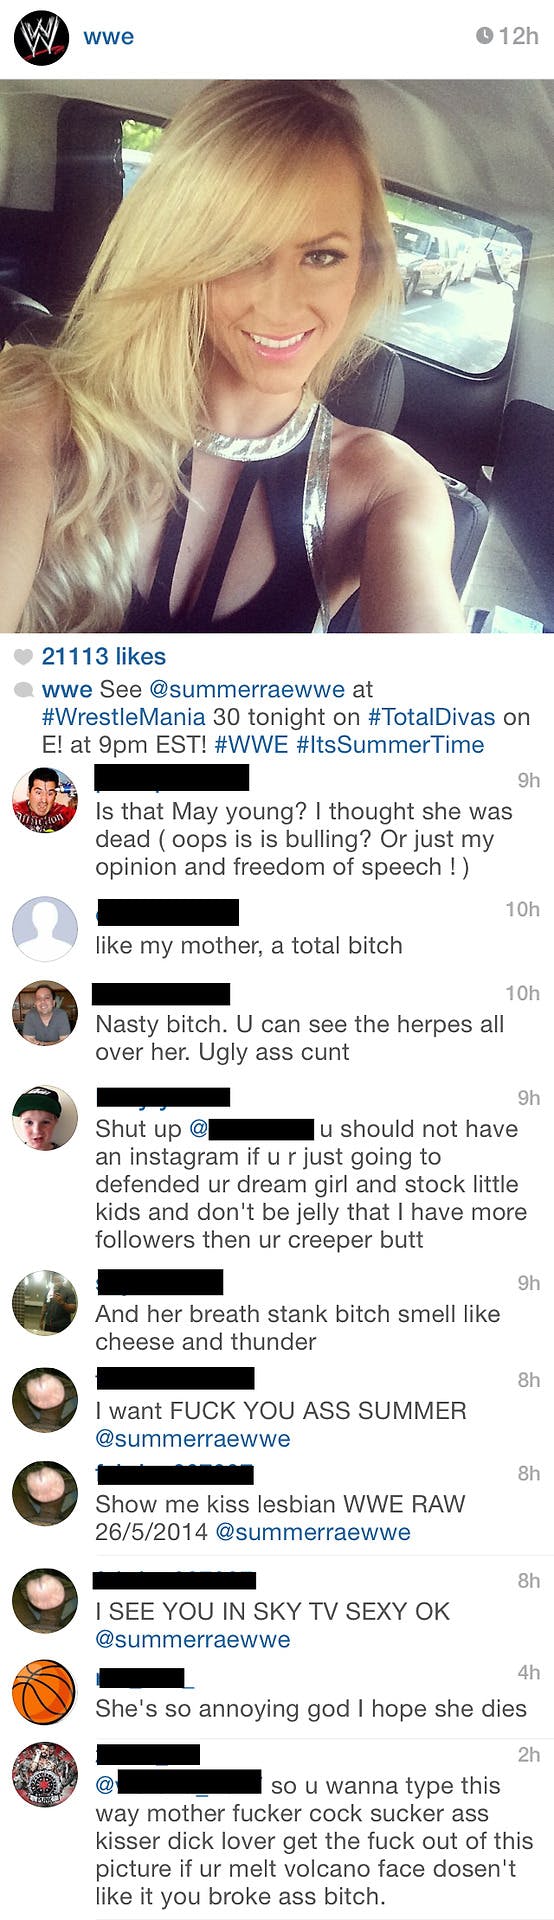 WWE wrestling sexism instagram comment